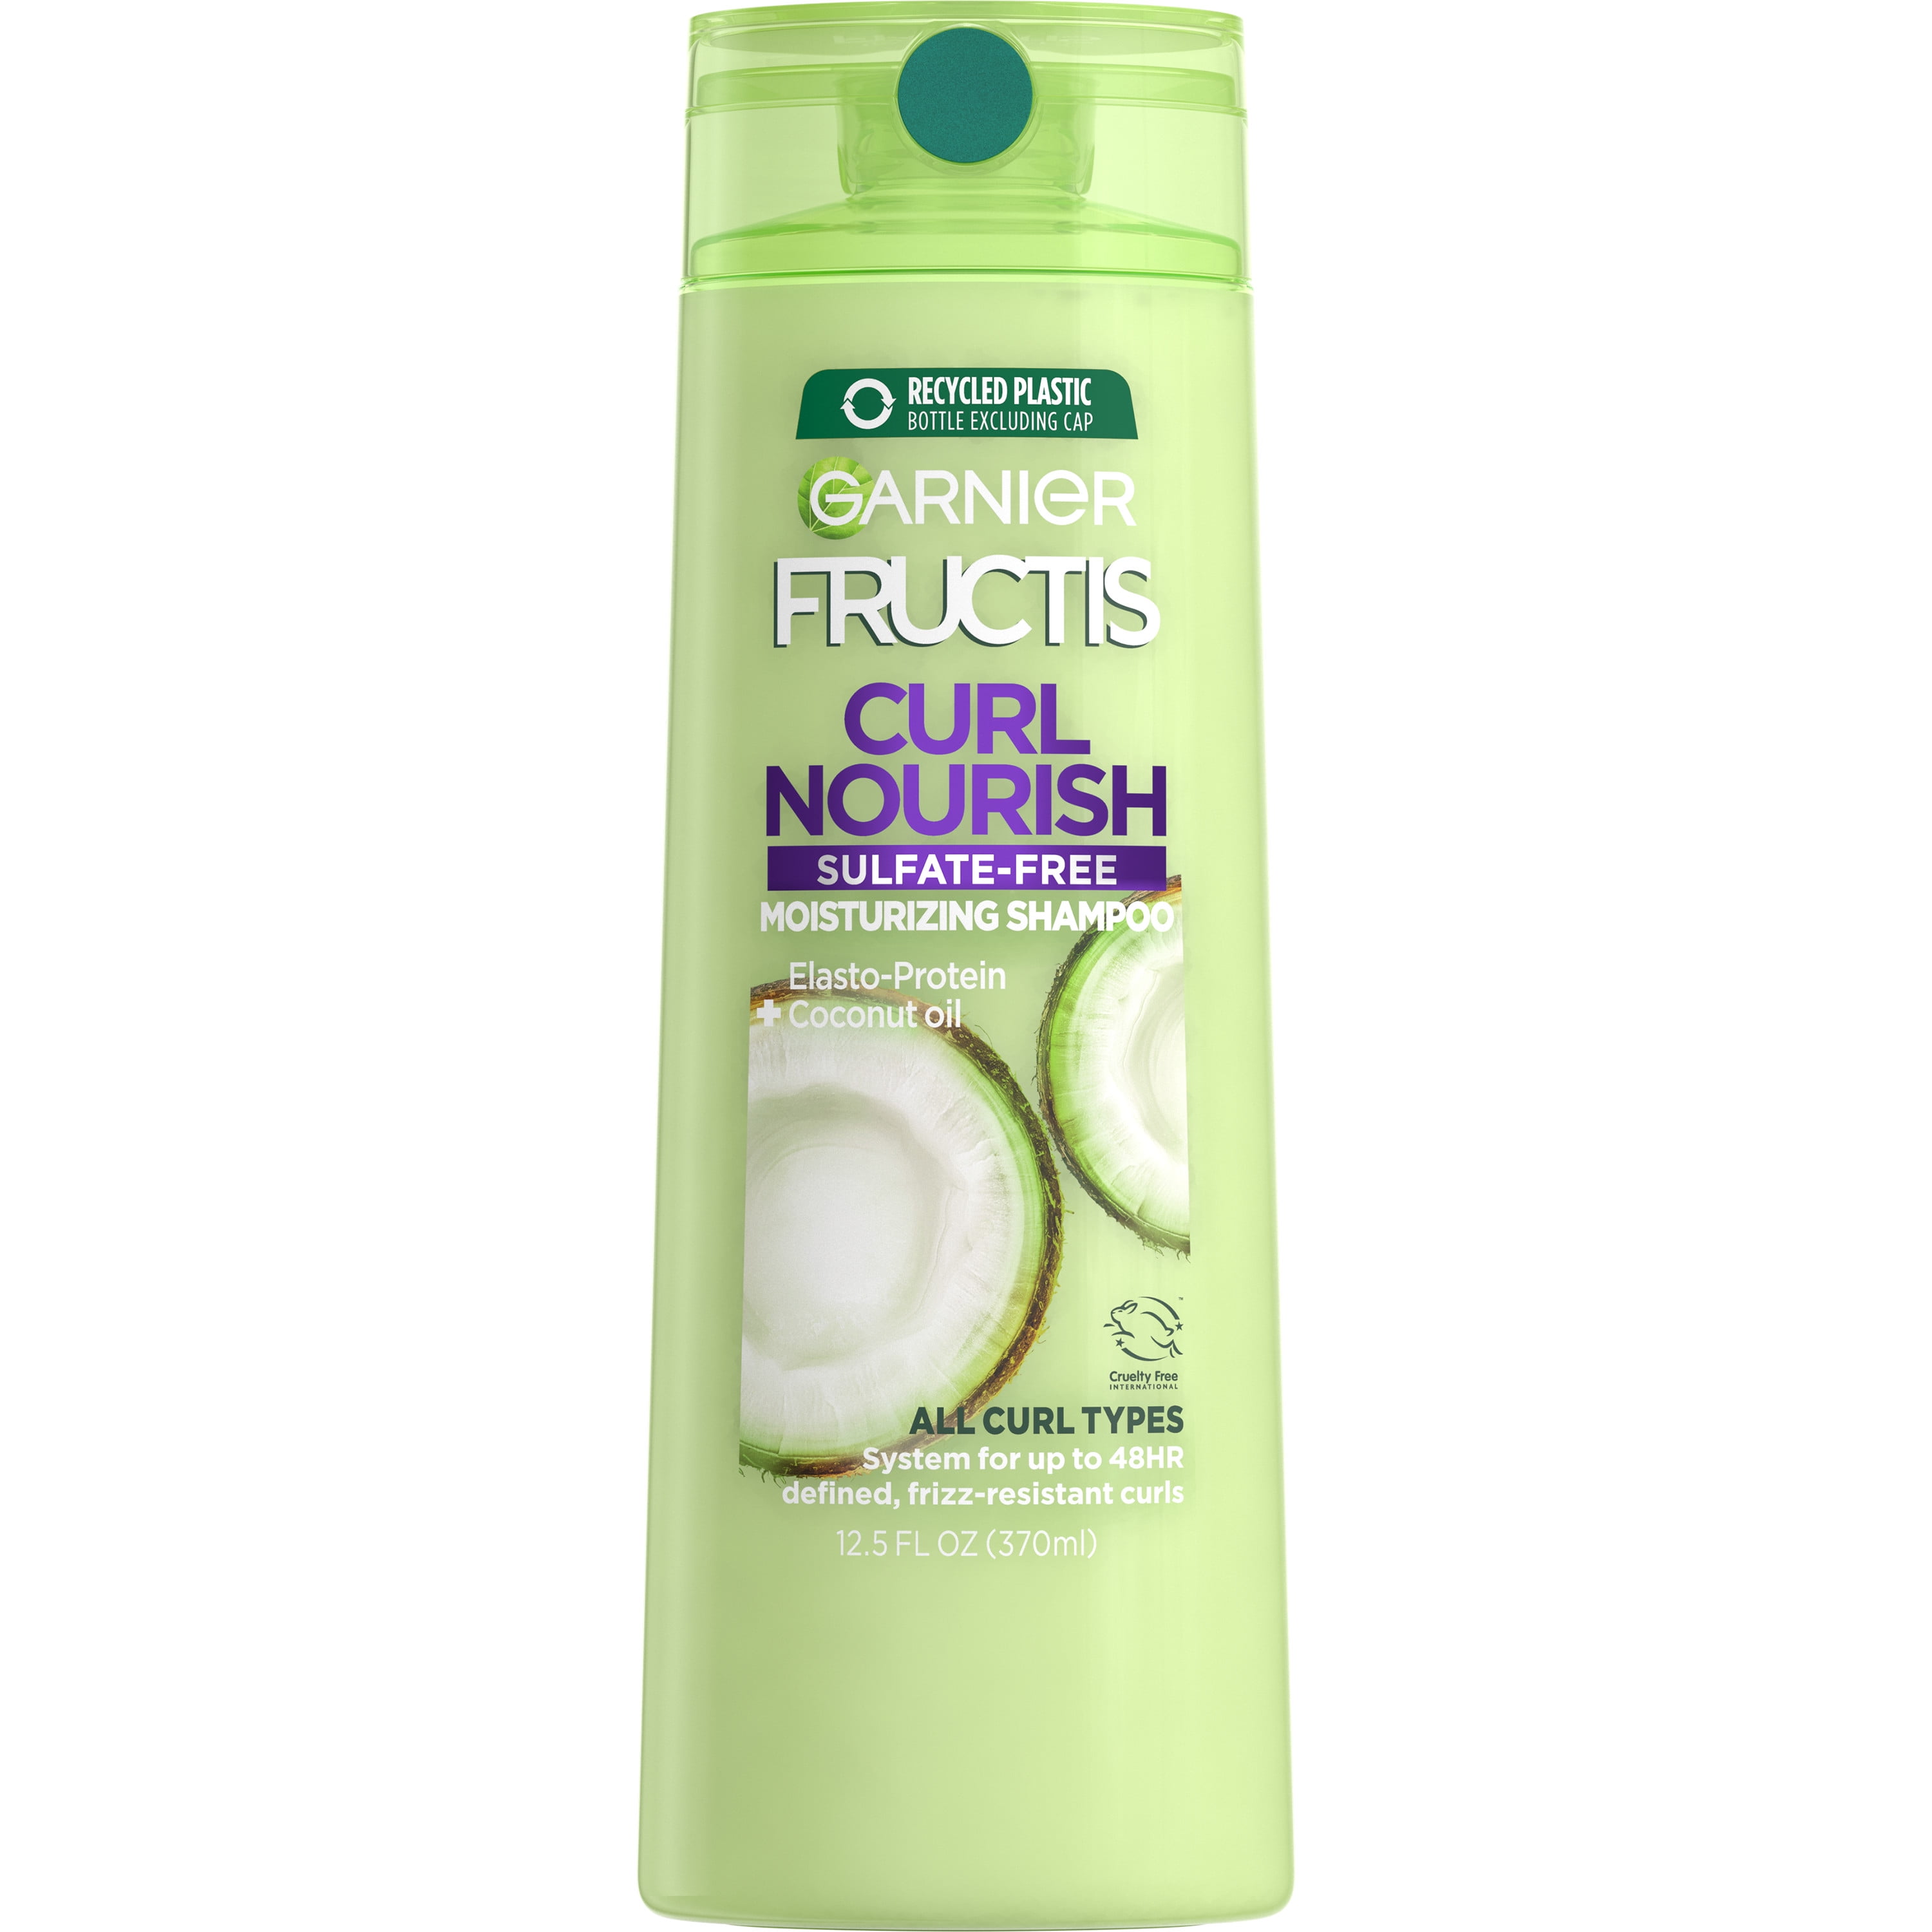 Garnier Fructis Curl Nourish Sulfate-Free Shampoo with Coconut Oil, 12.5 fl oz